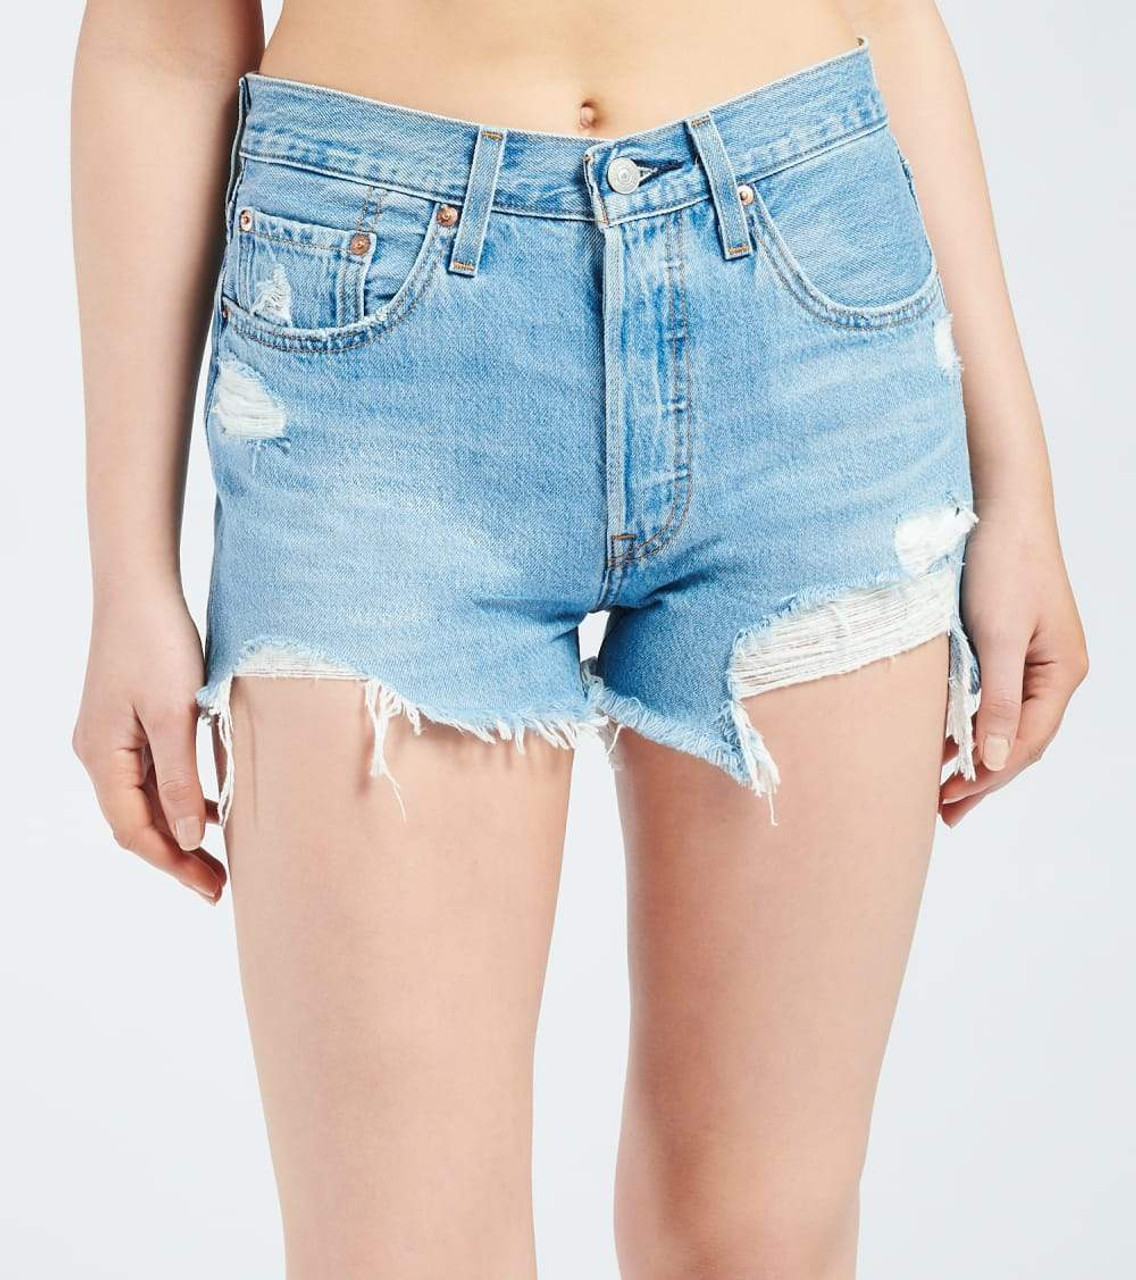 Product Name: Levi's Women's 501 Fray Hem Skinny Jeans